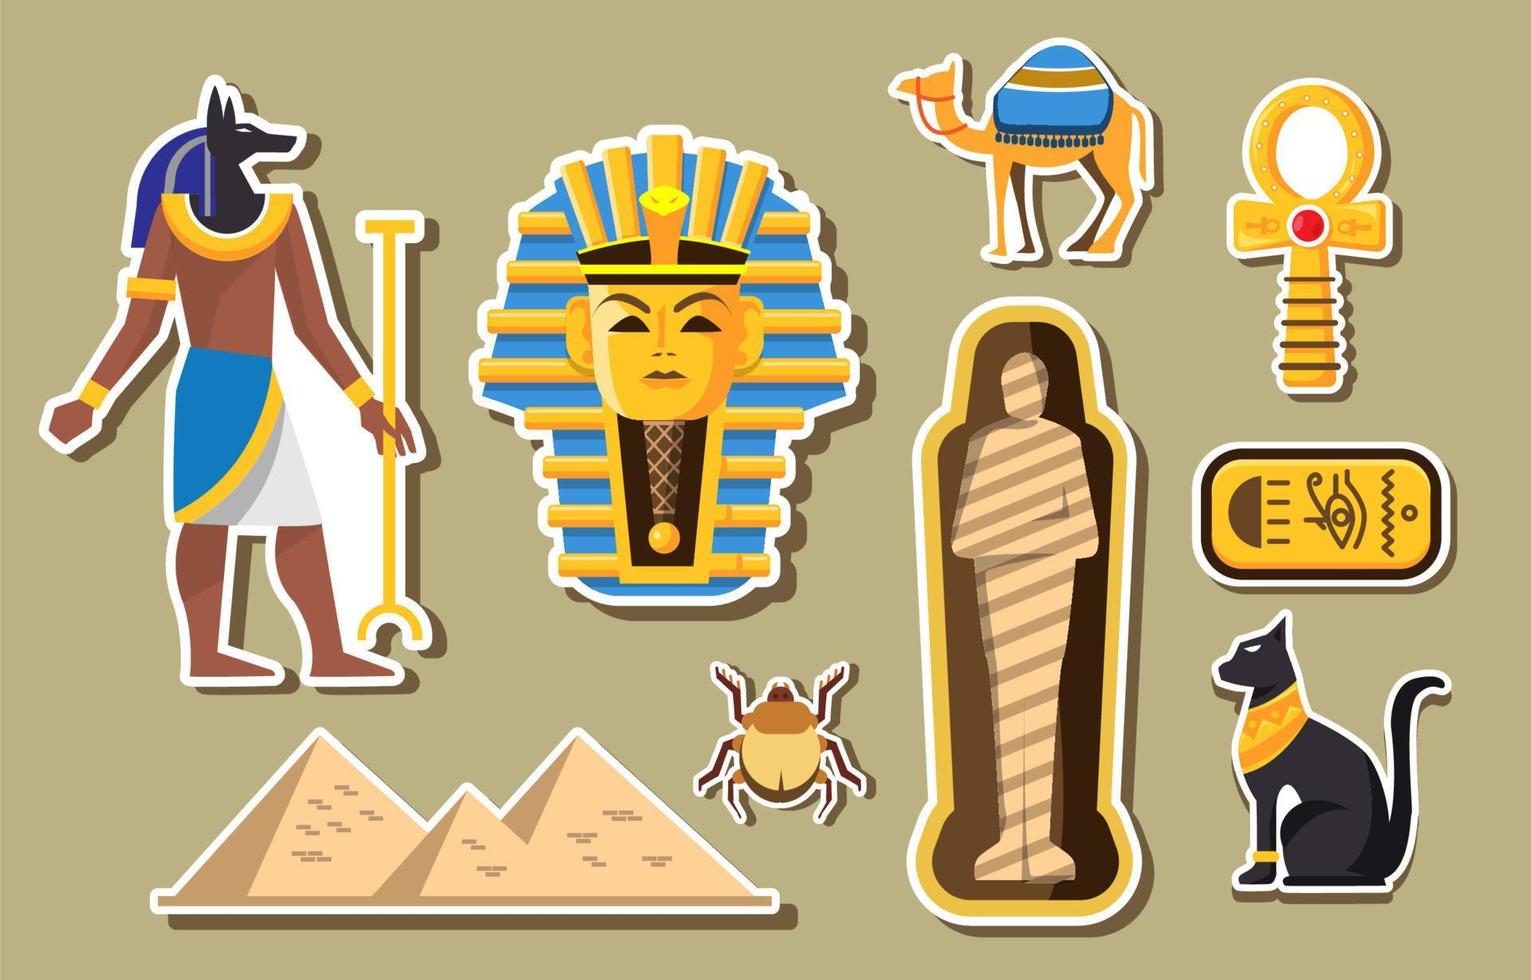 alte ägyptische kulturaufklebersammlung vektor